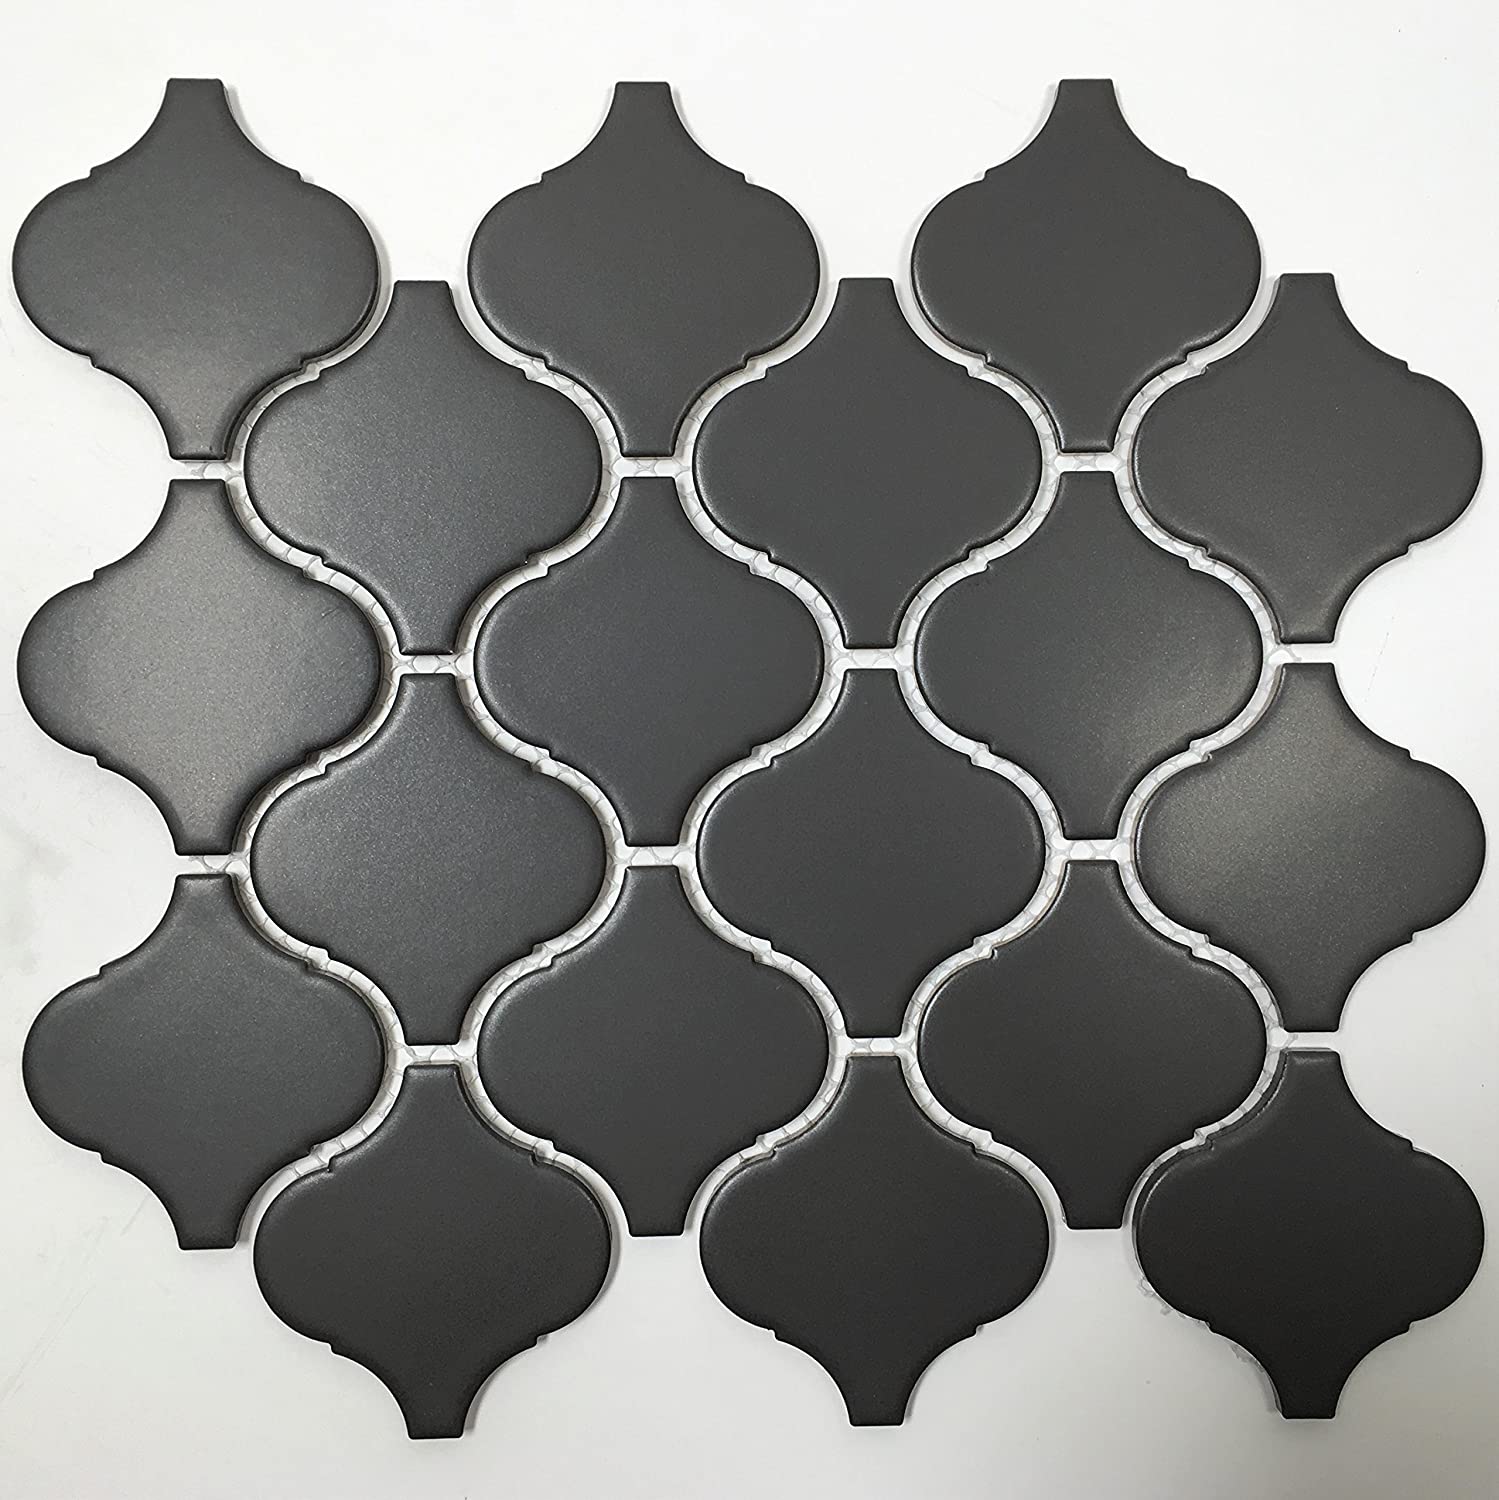 Lantern Black Porcelain Matte Mosaic Wall Floor Tile for Kitchen backsplash, Bathroom Shower, Accent Décor